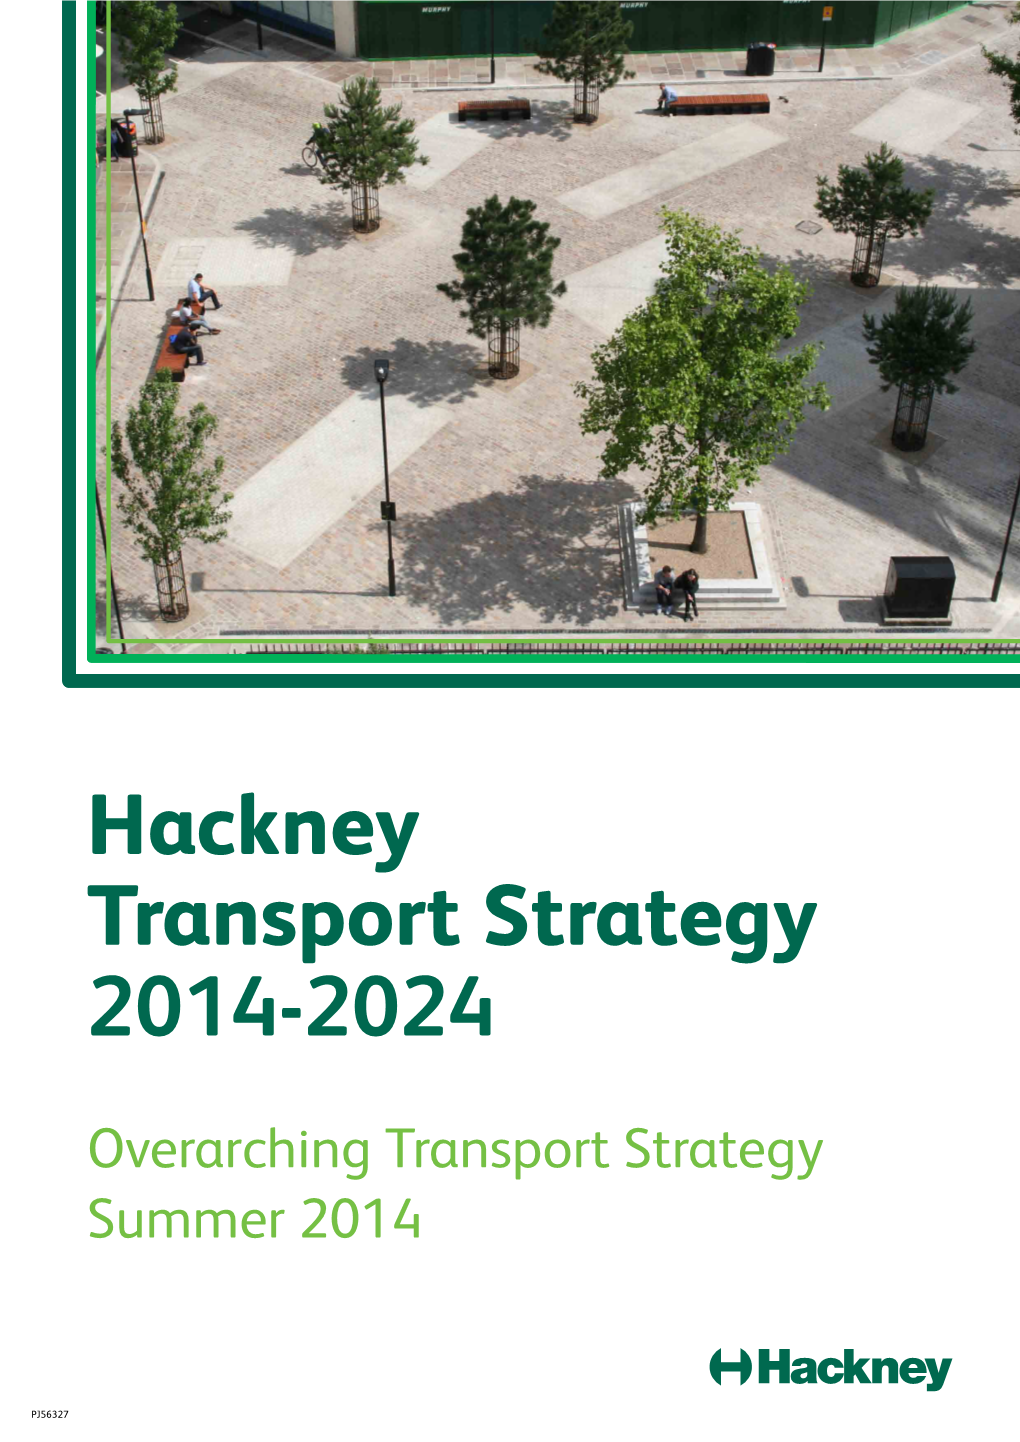 Hackney Transport Strategy 2014-2024